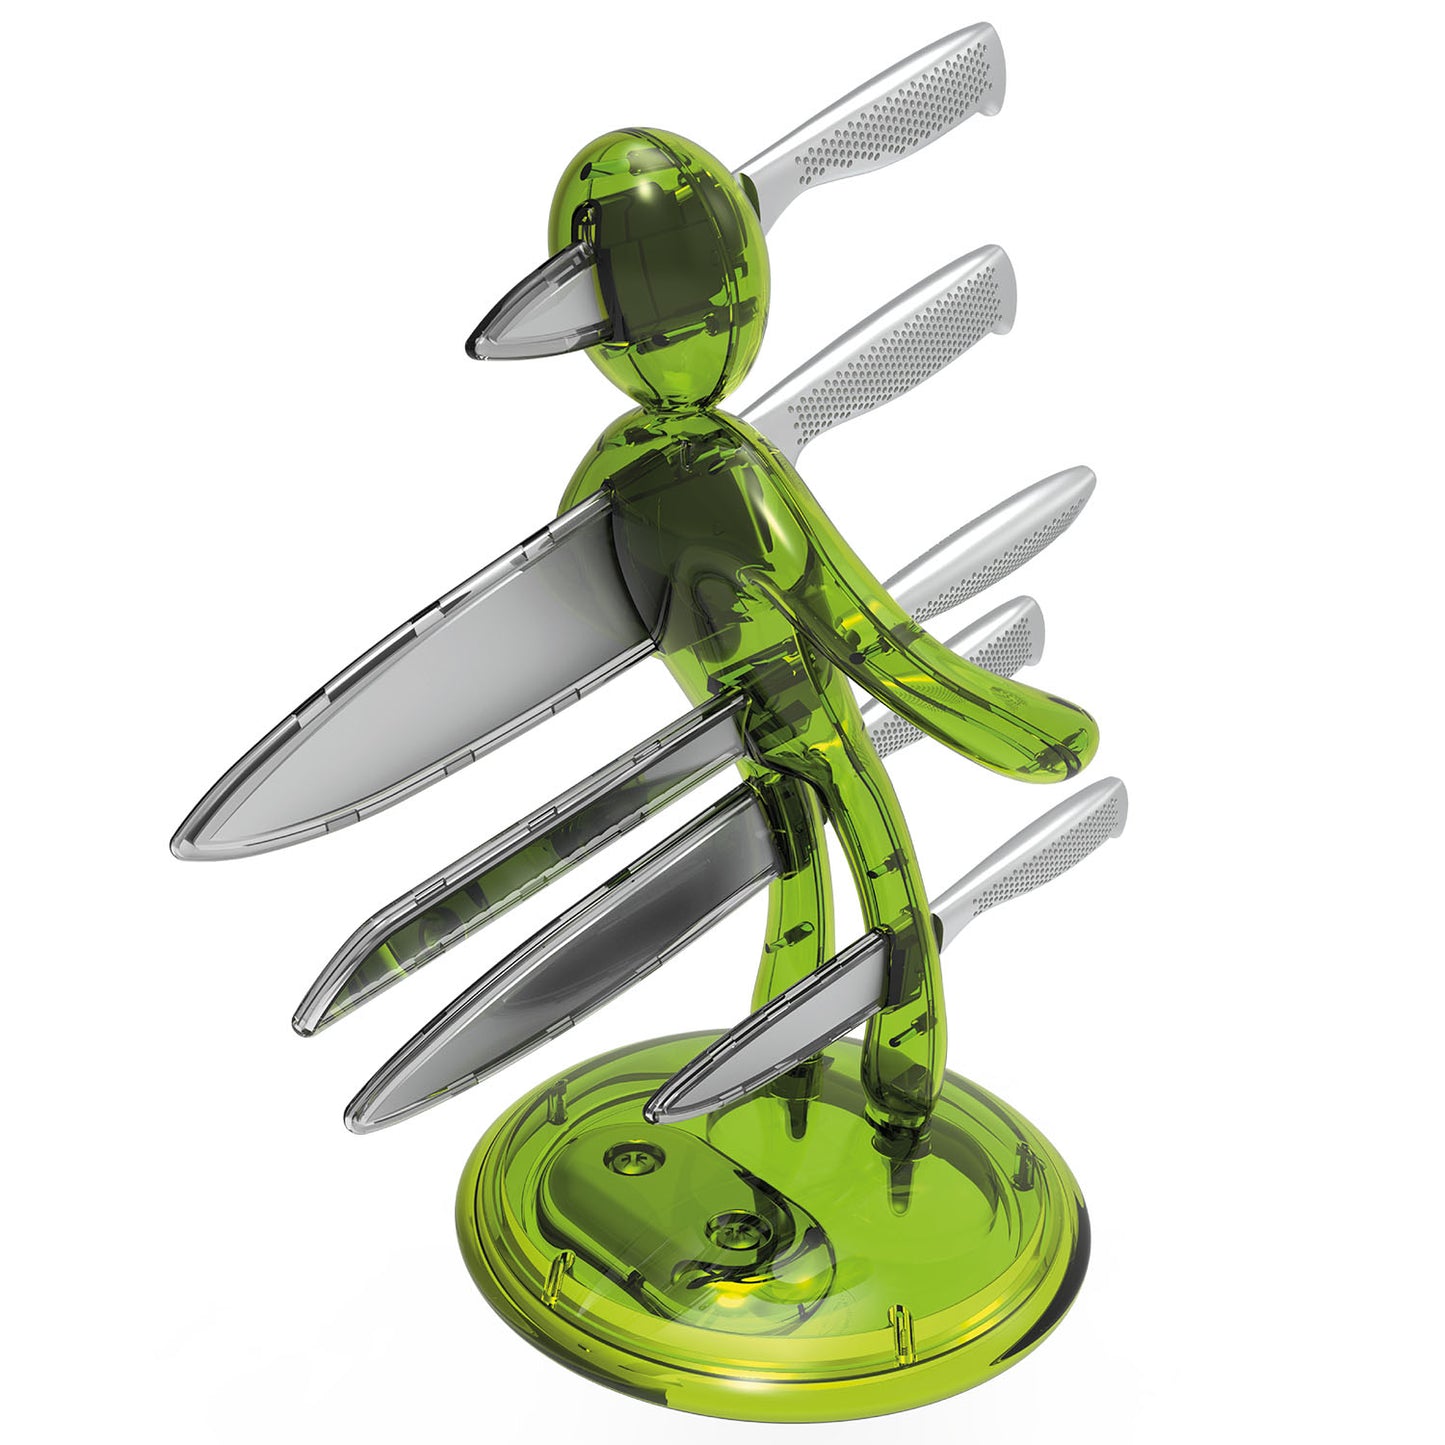 Voodoo/TheEx "Classic Edition" Knife Set - Green Translucent Plastic Holder